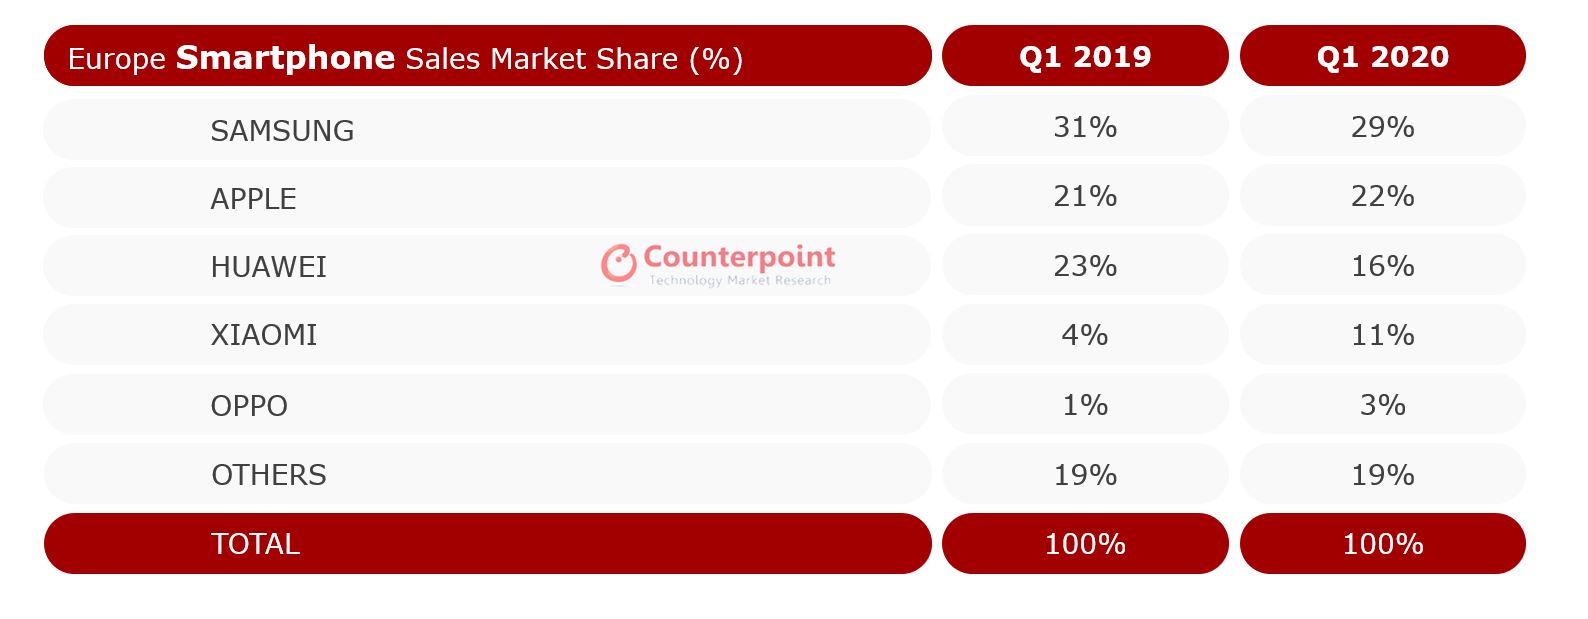 Europe Smartphone Sales Market Share (%), Q1 2019 vs Q1 2020